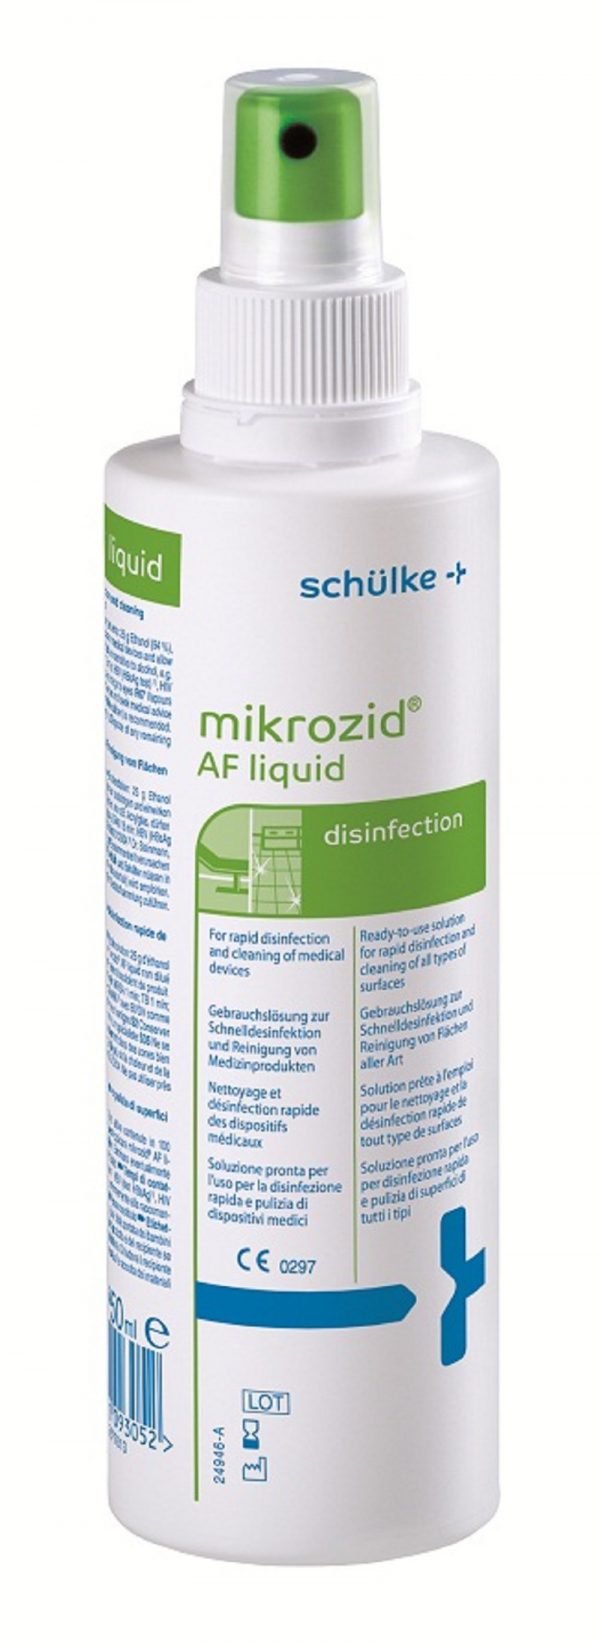 Mikrozid AF liquid Flächendesinfektion mit Sprühkopf | 250ml